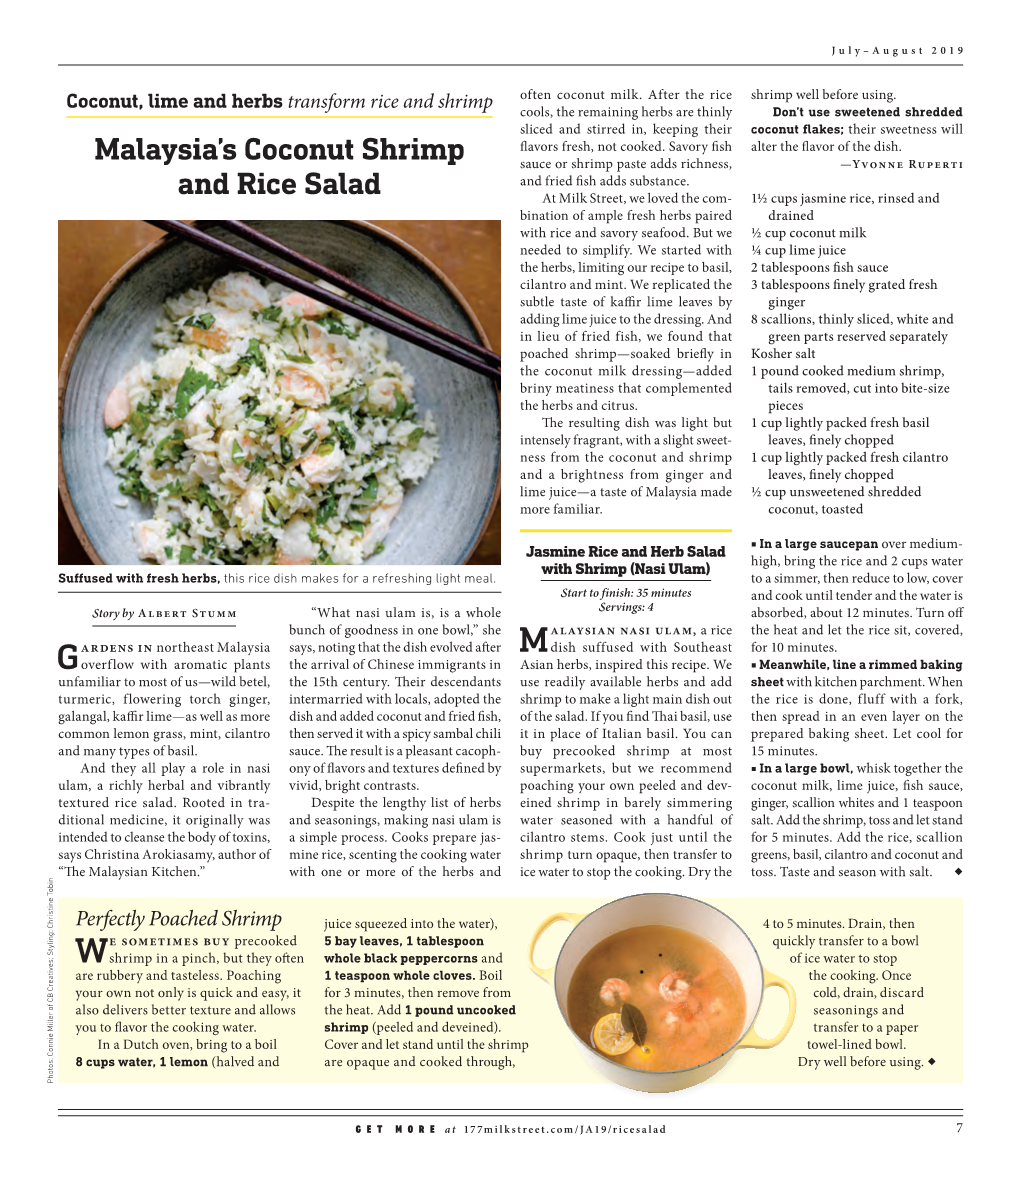 Malaysia's Coconut Shrimp and Rice Salad